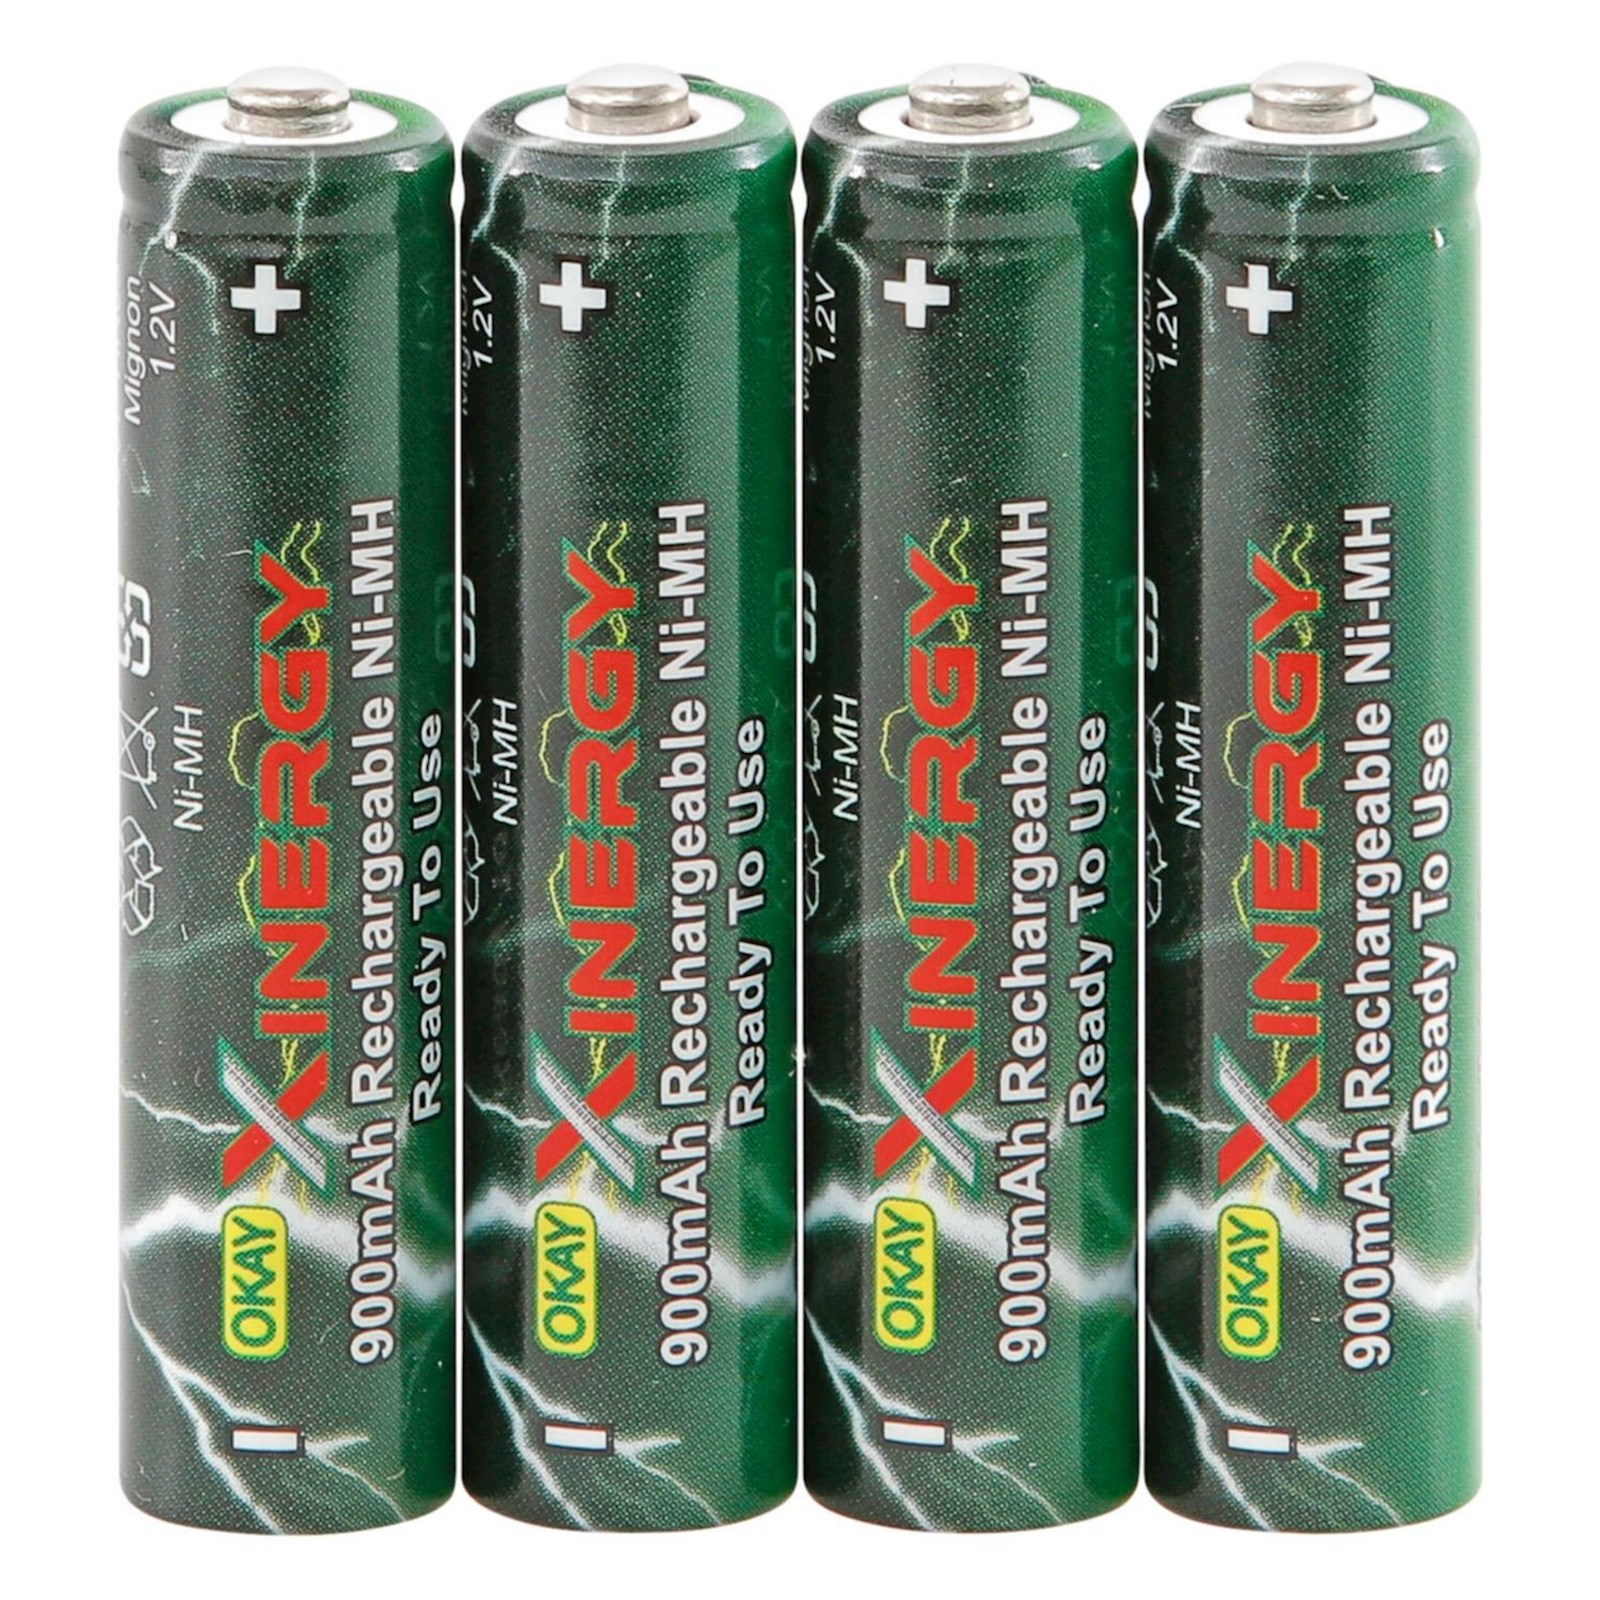 Accu AAA 900mAh Acheter - Batteries - LANDI